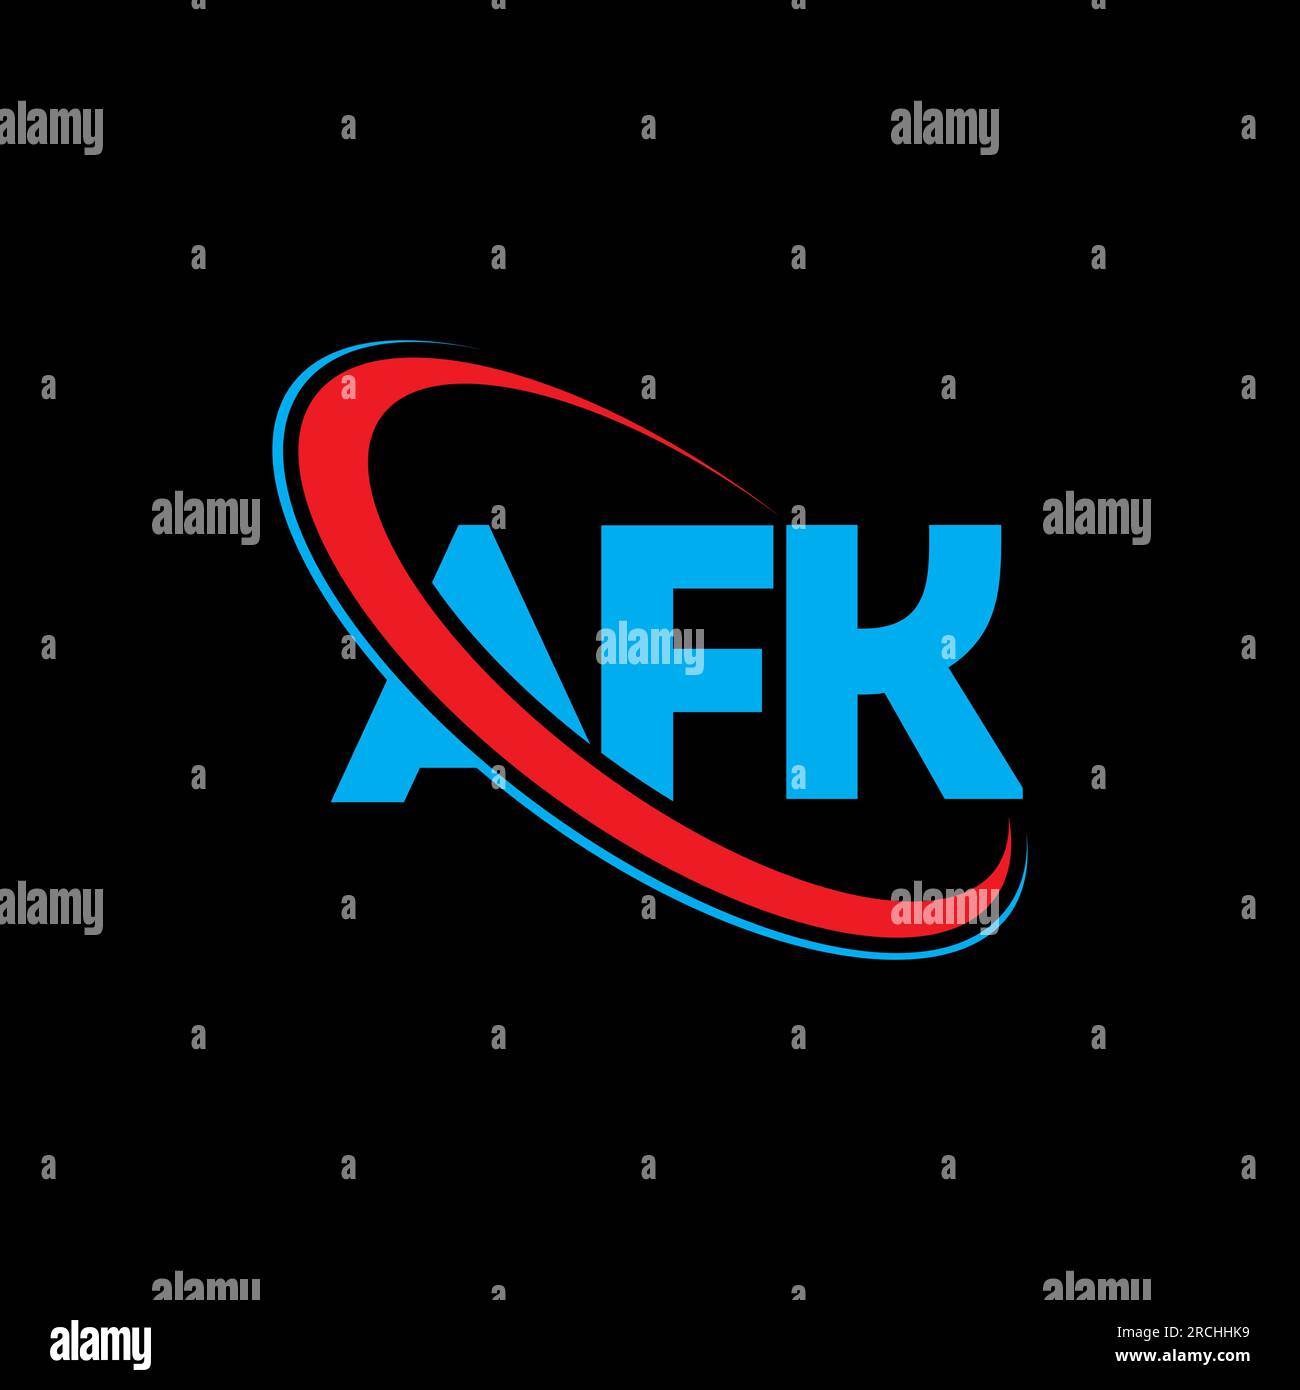 AFK logo. AFK letter. AFK letter logo design. Initials AFK logo linked with circle and uppercase monogram logo. AFK typography for technology, busines Stock Vector